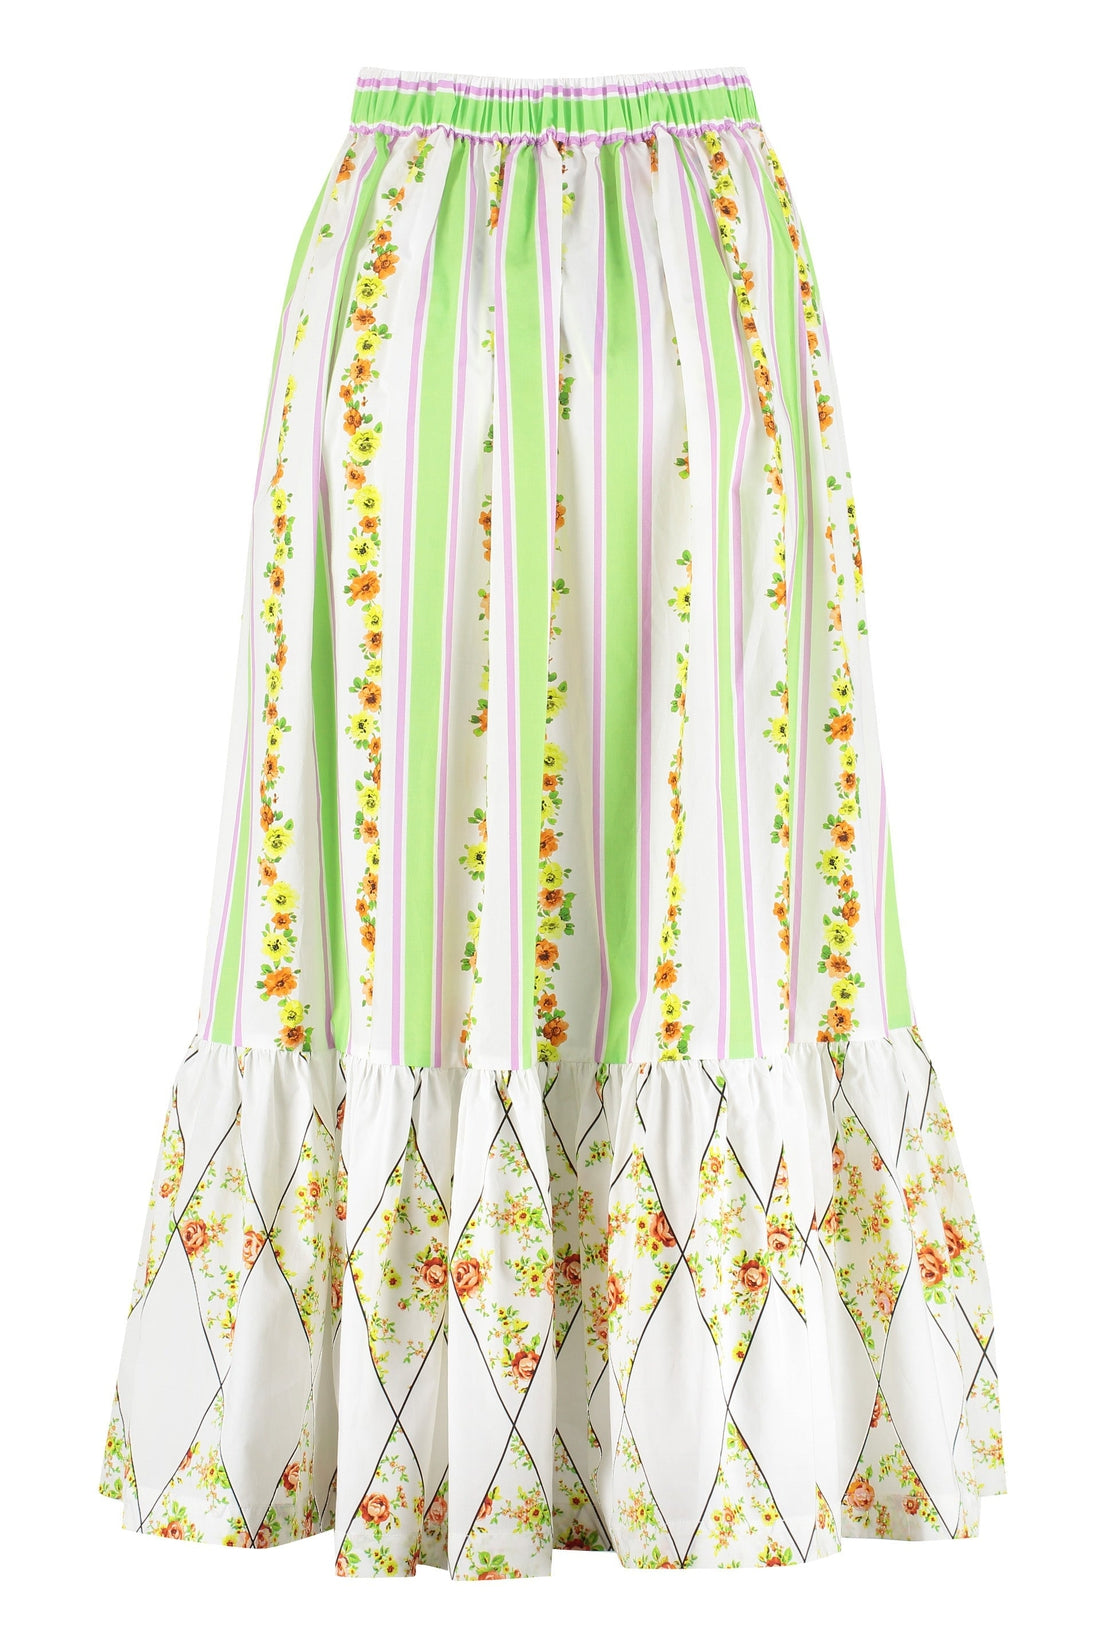 MSGM-OUTLET-SALE-Printed cotton skirt-ARCHIVIST